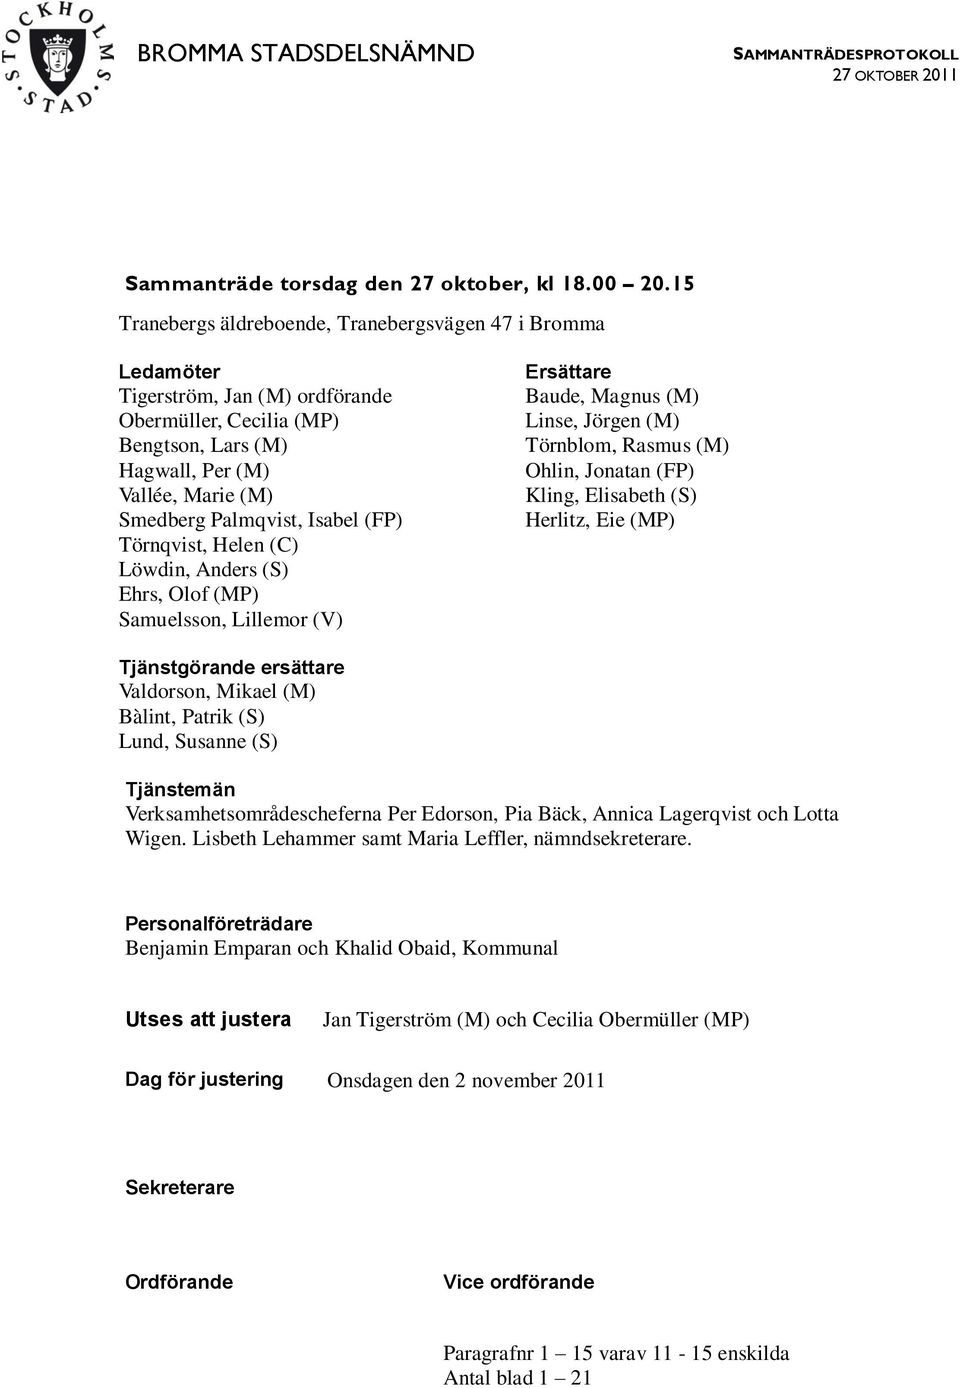 BROMMA STADSDELSNÄMND - PDF Free Download